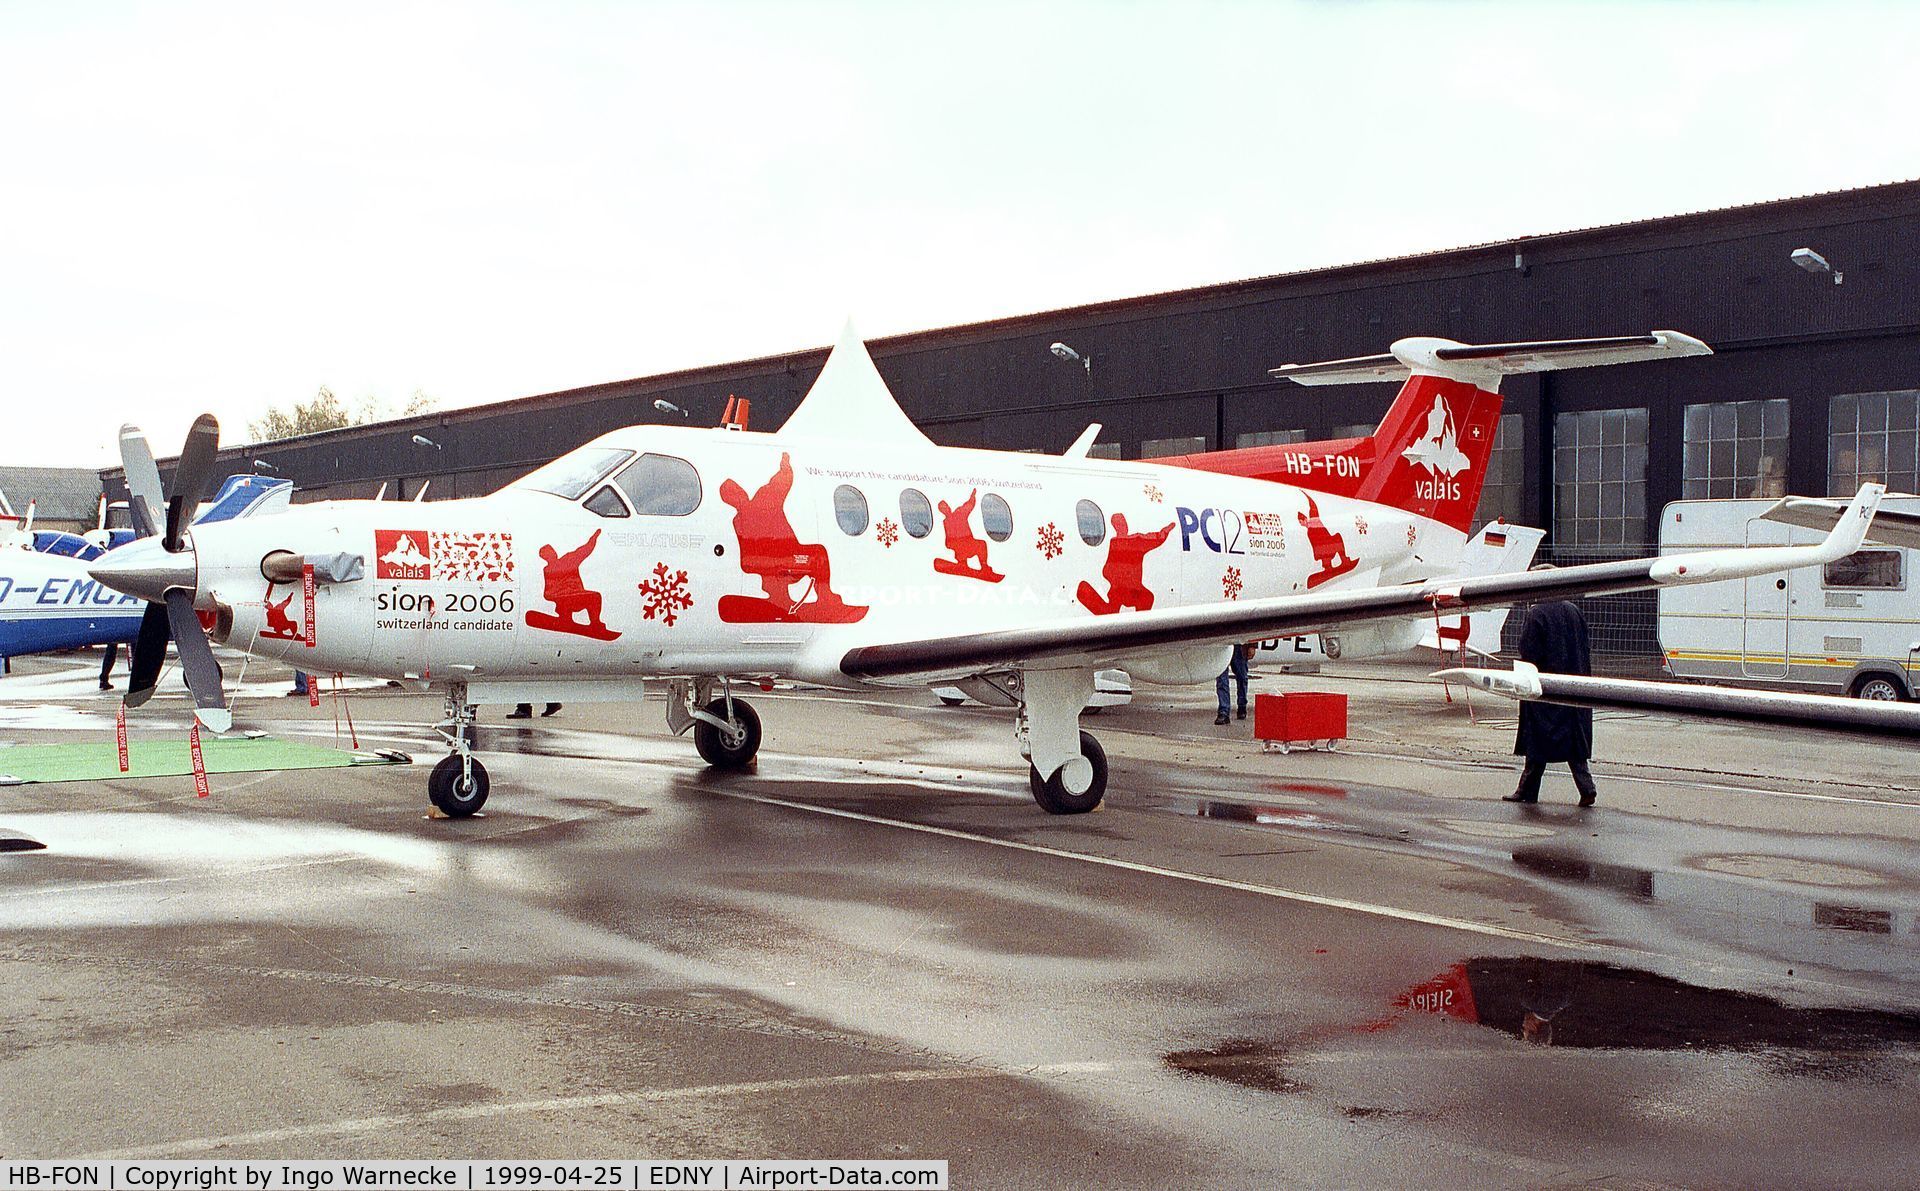 HB-FON, 1998 Pilatus PCXII C/N 213, Pilatus PC-12 at the Aero 1999, Friedrichshafen